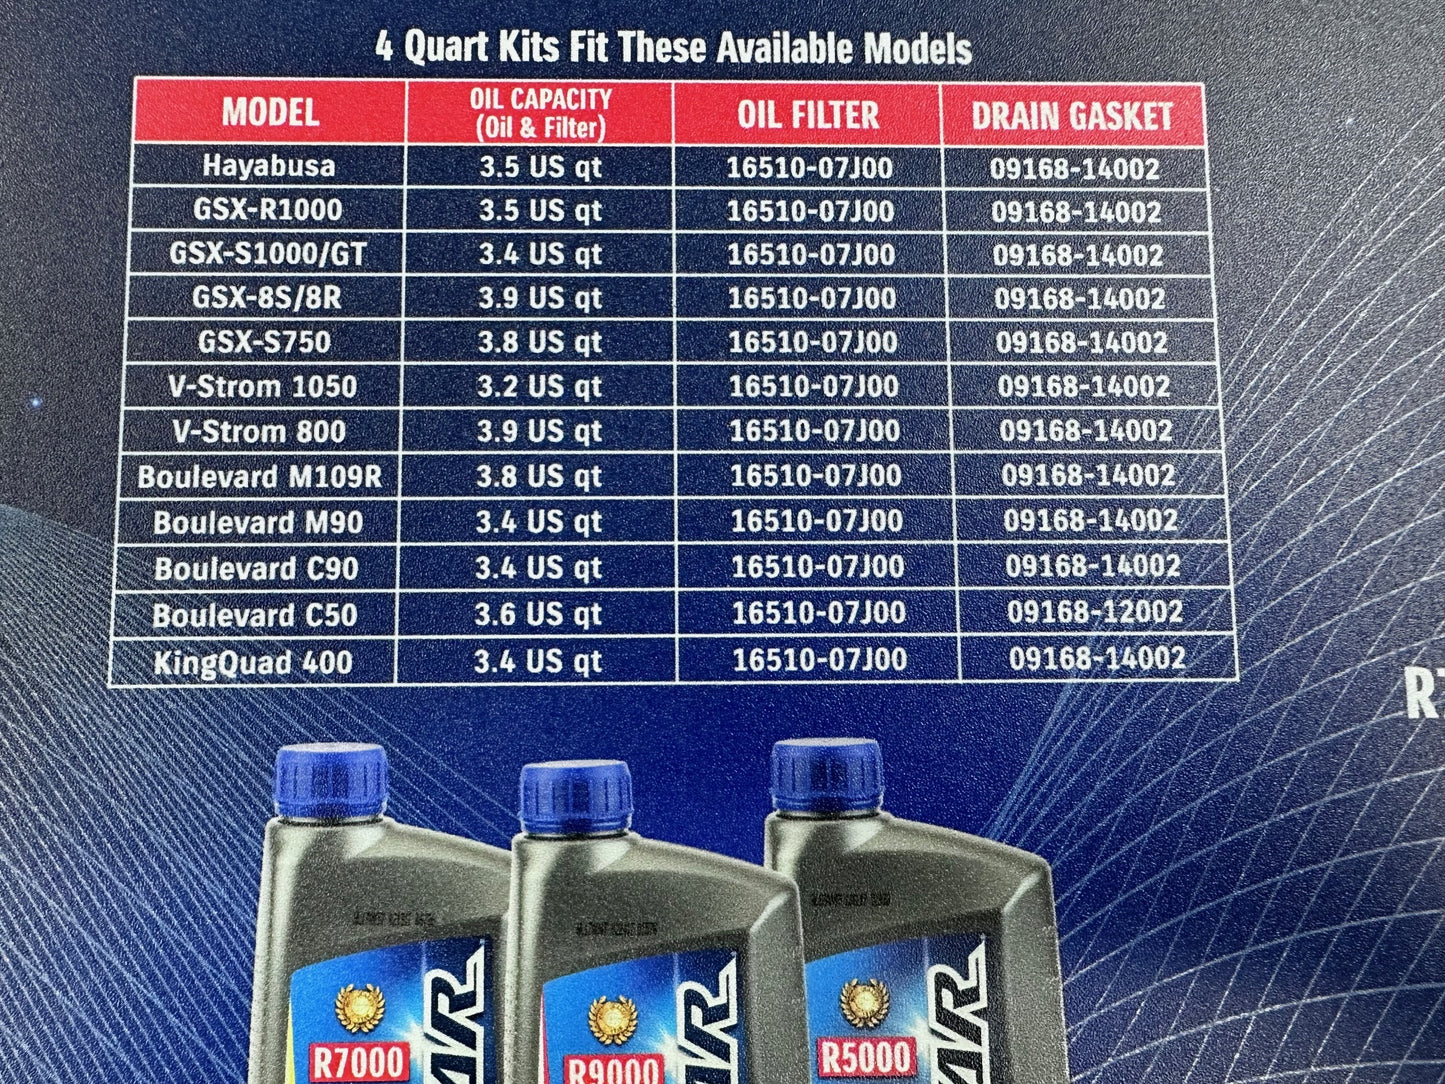 Suzuki ECSTAR R9000 Full-Synthetic 10W40 Oil Change Kit 4 Quarts 990A0-01E40-4KT